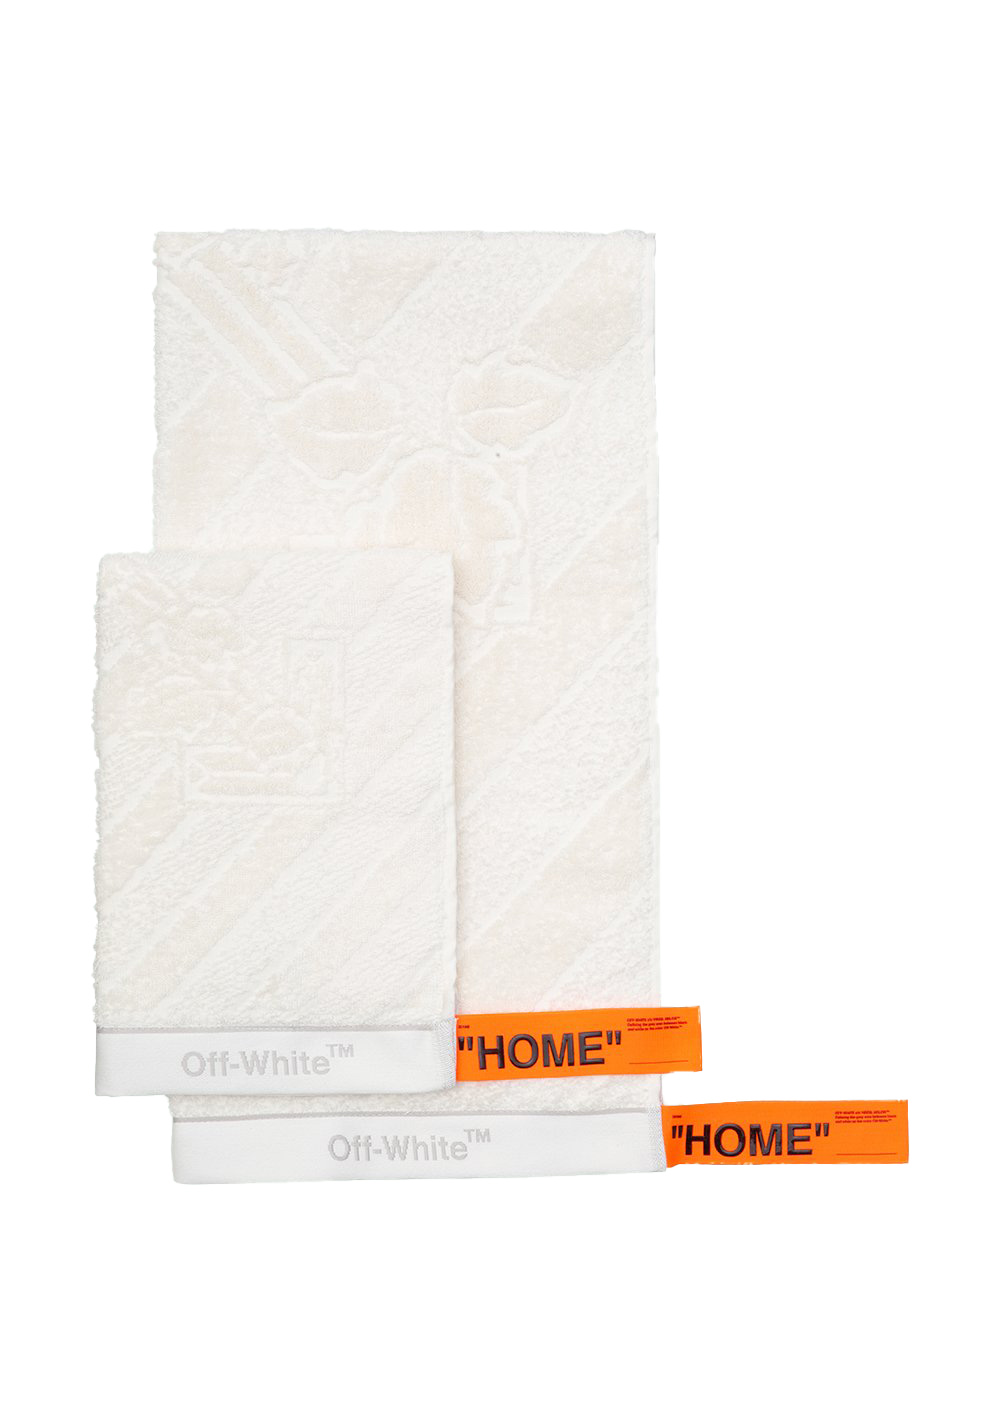 OFF-WHITE Towel Set White/Ice Grey - US